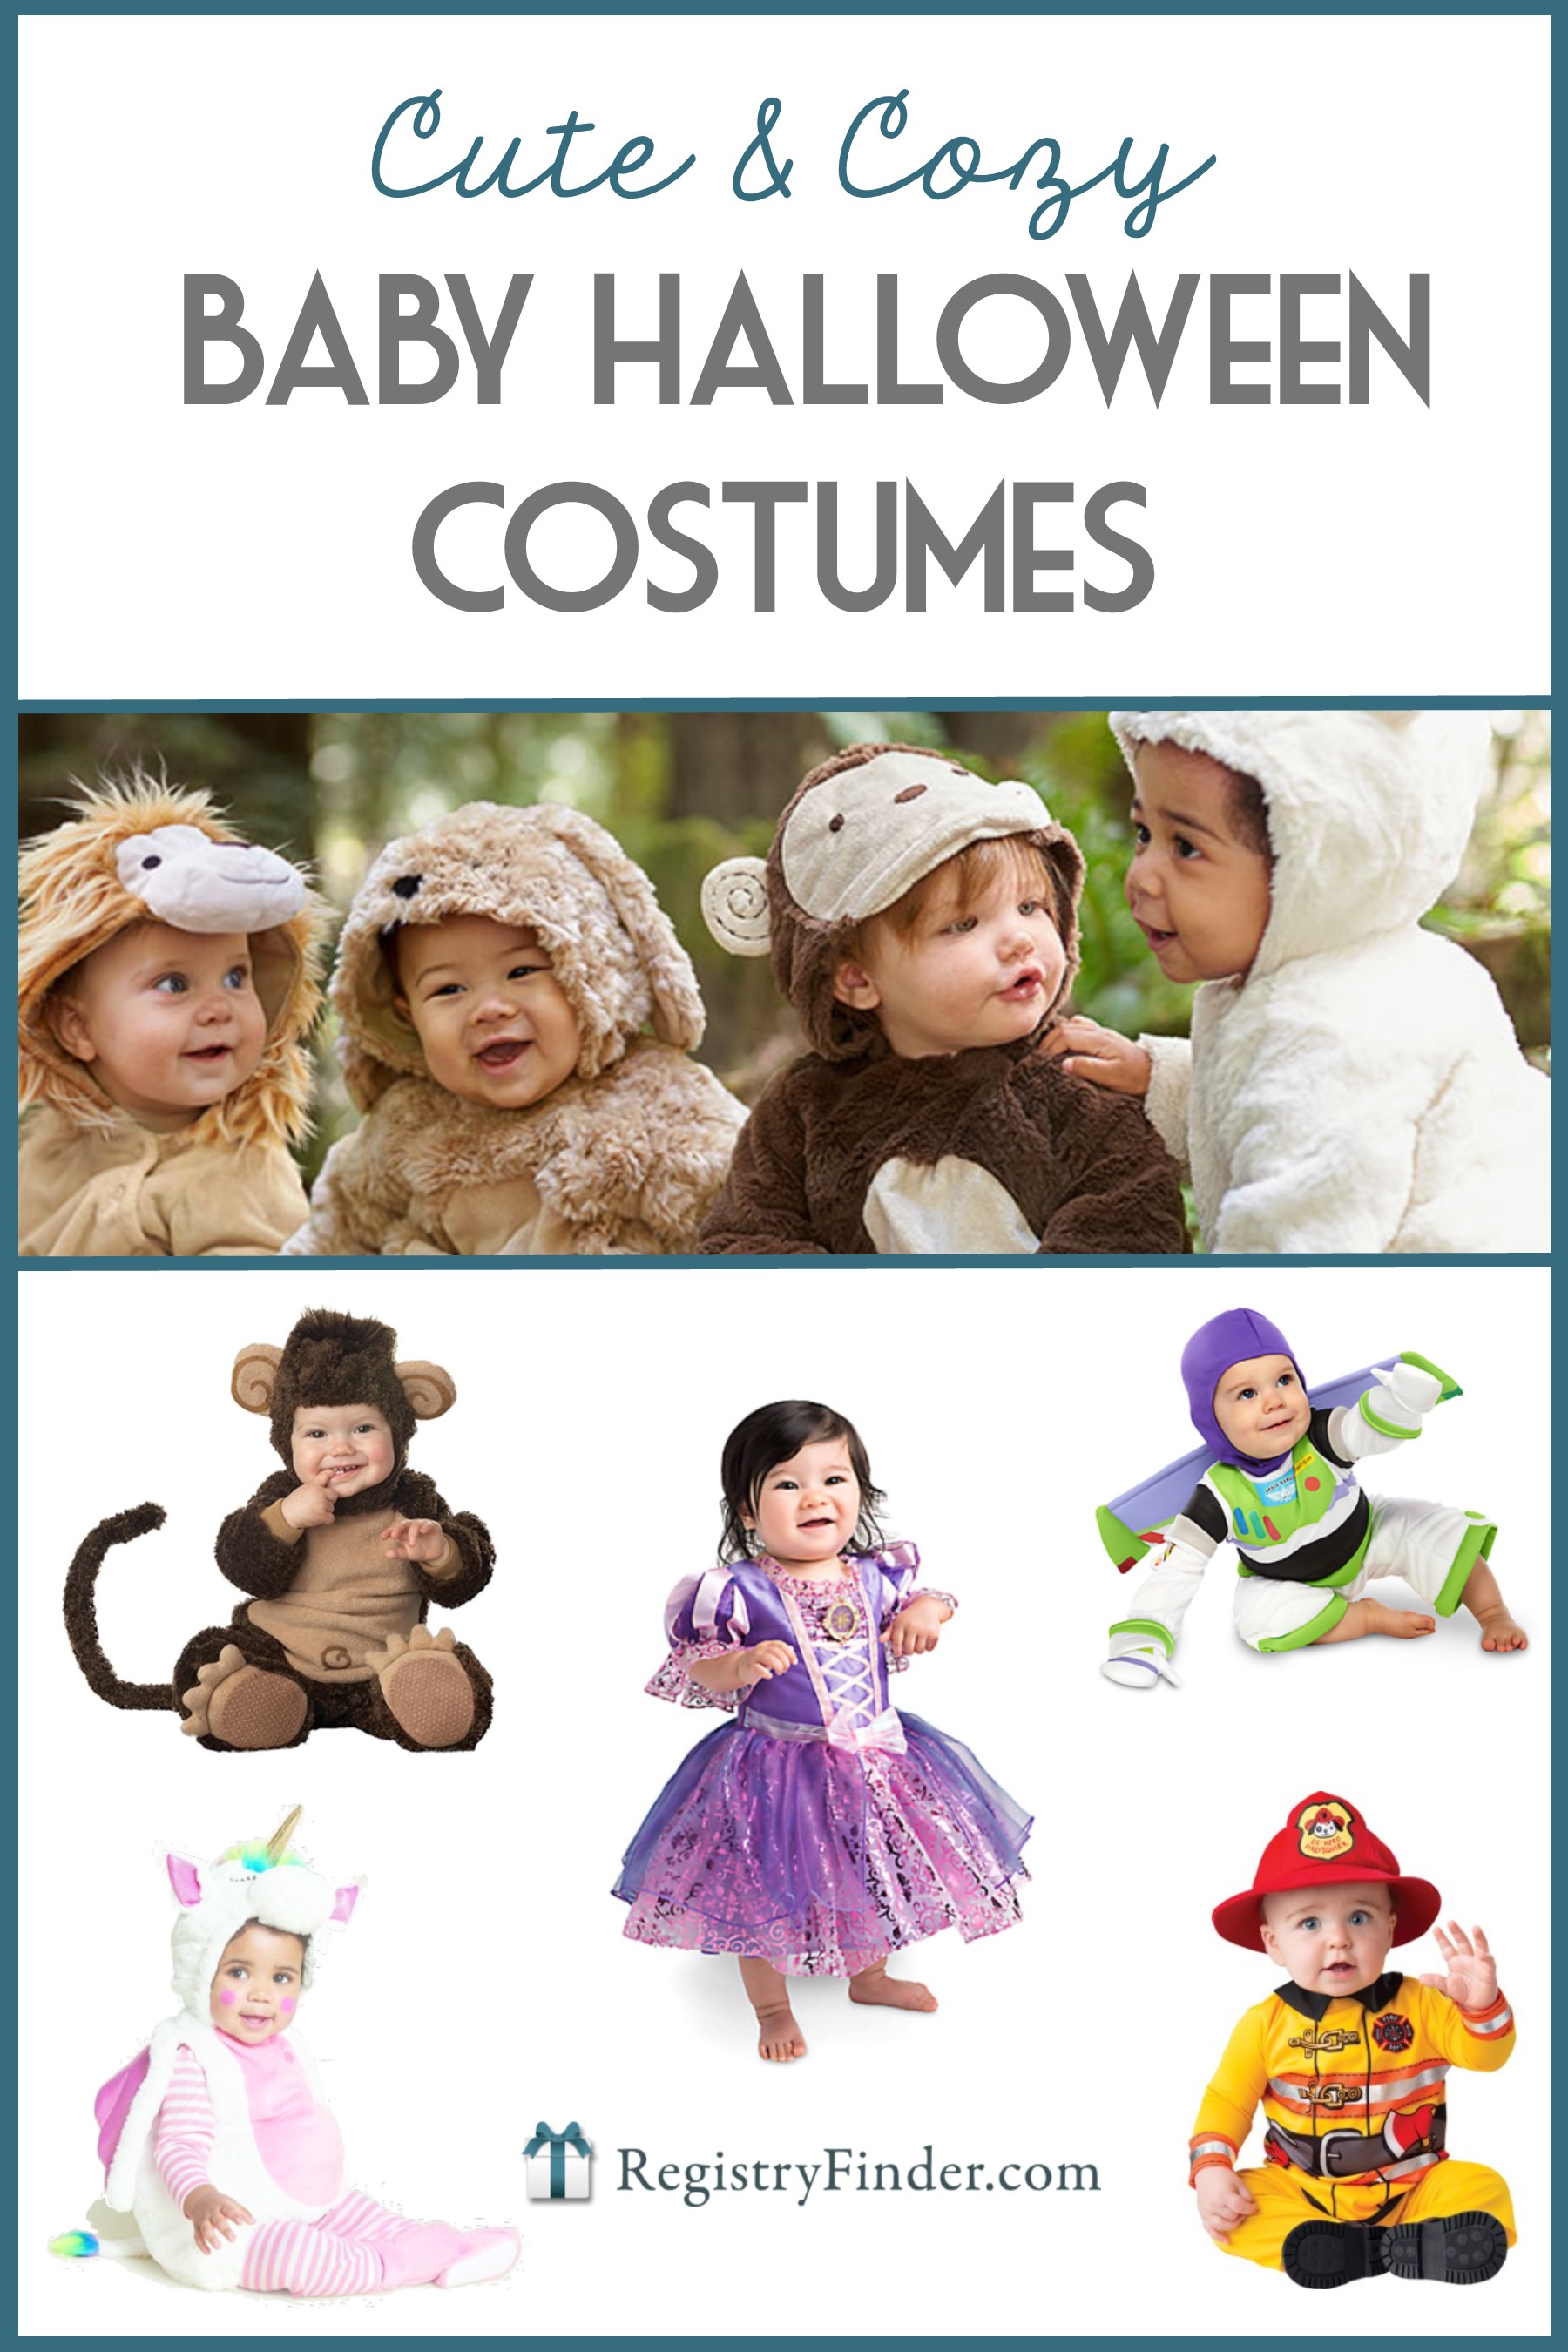 Cute and Cuddly Baby Halloween Costumes | RegistryFinder.com